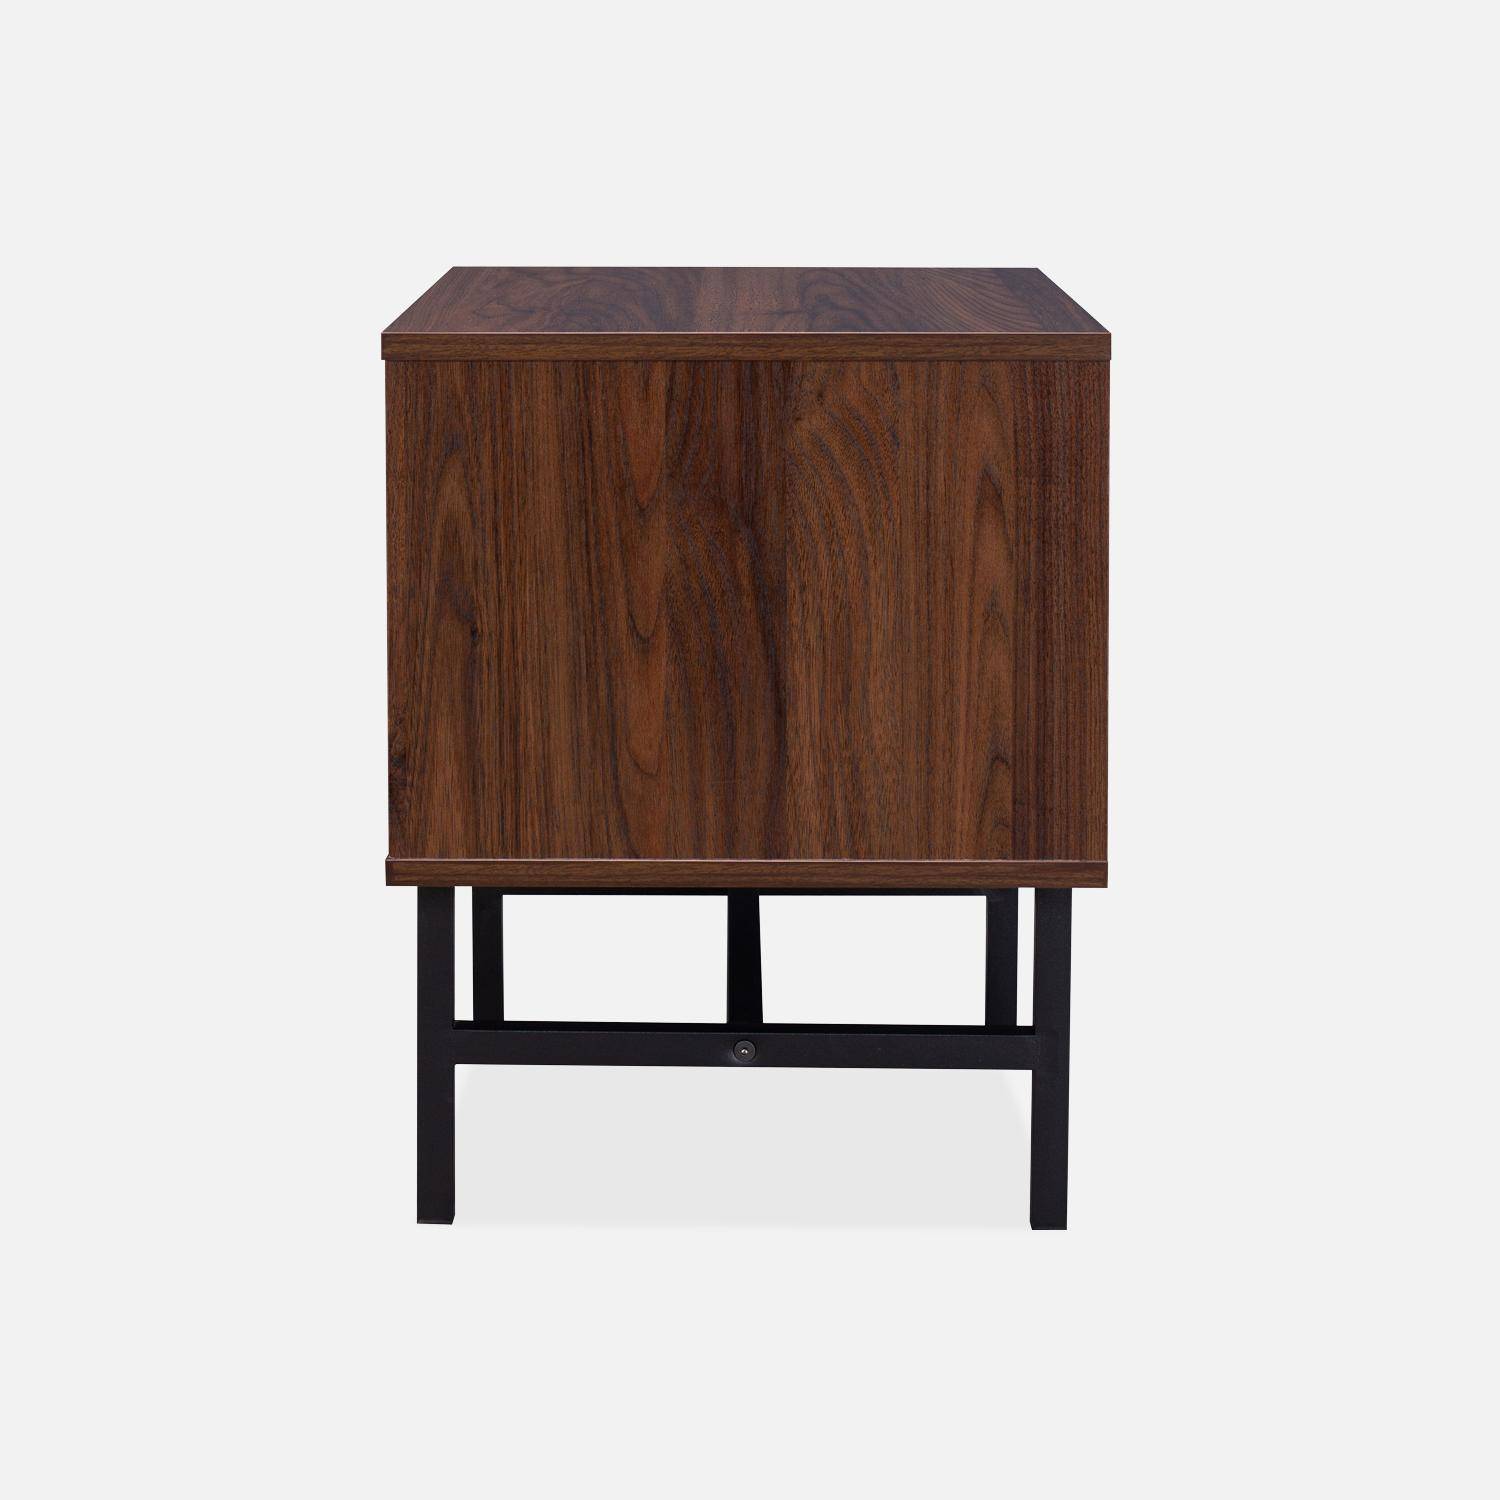 Bedside table, dark wood effect, grooved wood decor, one drawer, L 48 x W 39 x H 50cm,sweeek,Photo3